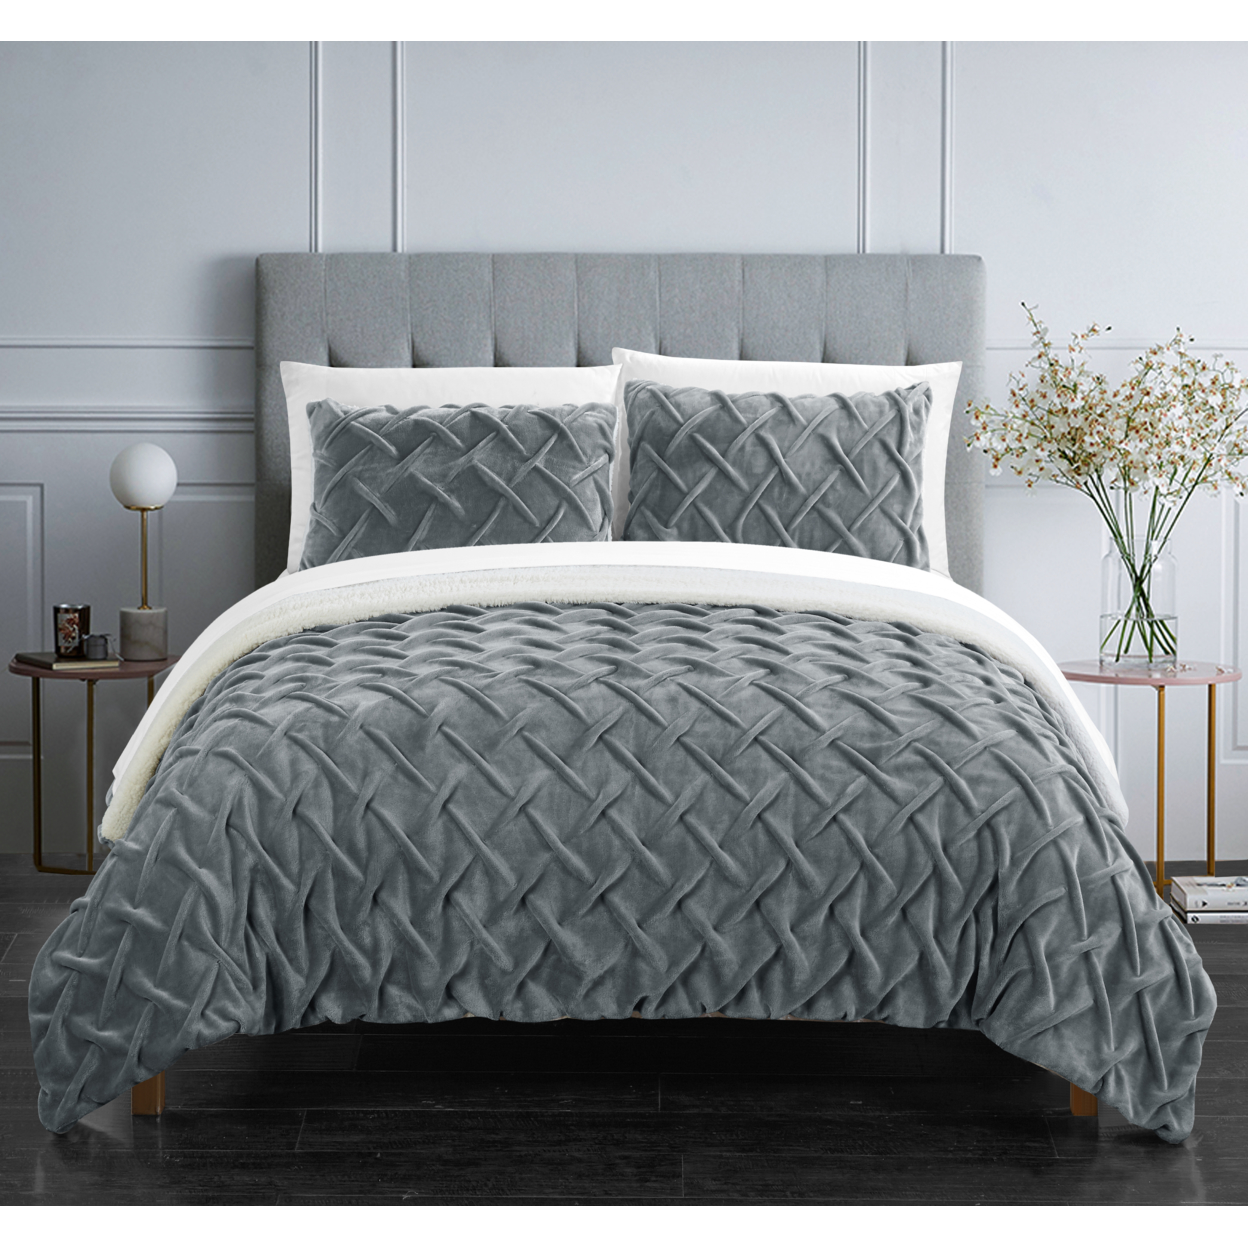 Thirsa 3 Or 2 Piece Comforter Set Ultra Plush Micro Mink Criss Cross Pinch Pleat Sherpa Lined Bedding - Grey, King